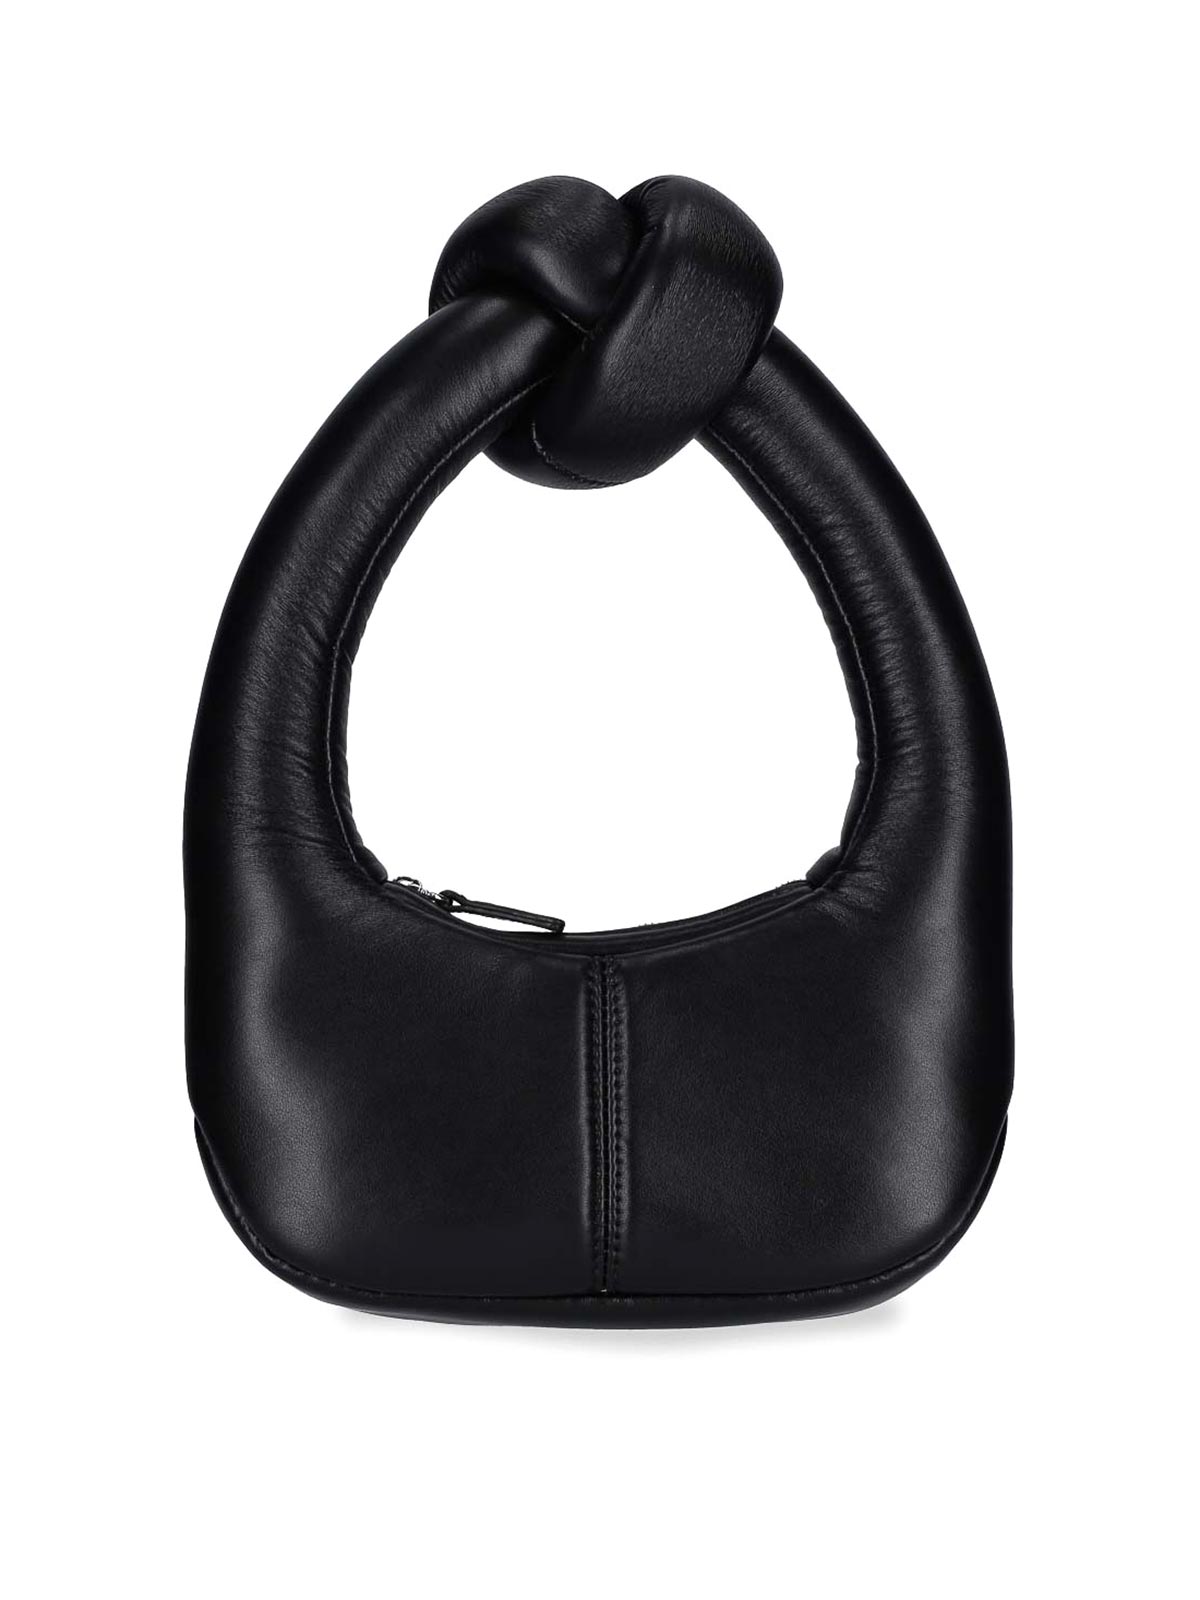 A.w.a.k.e. Handbag In Black